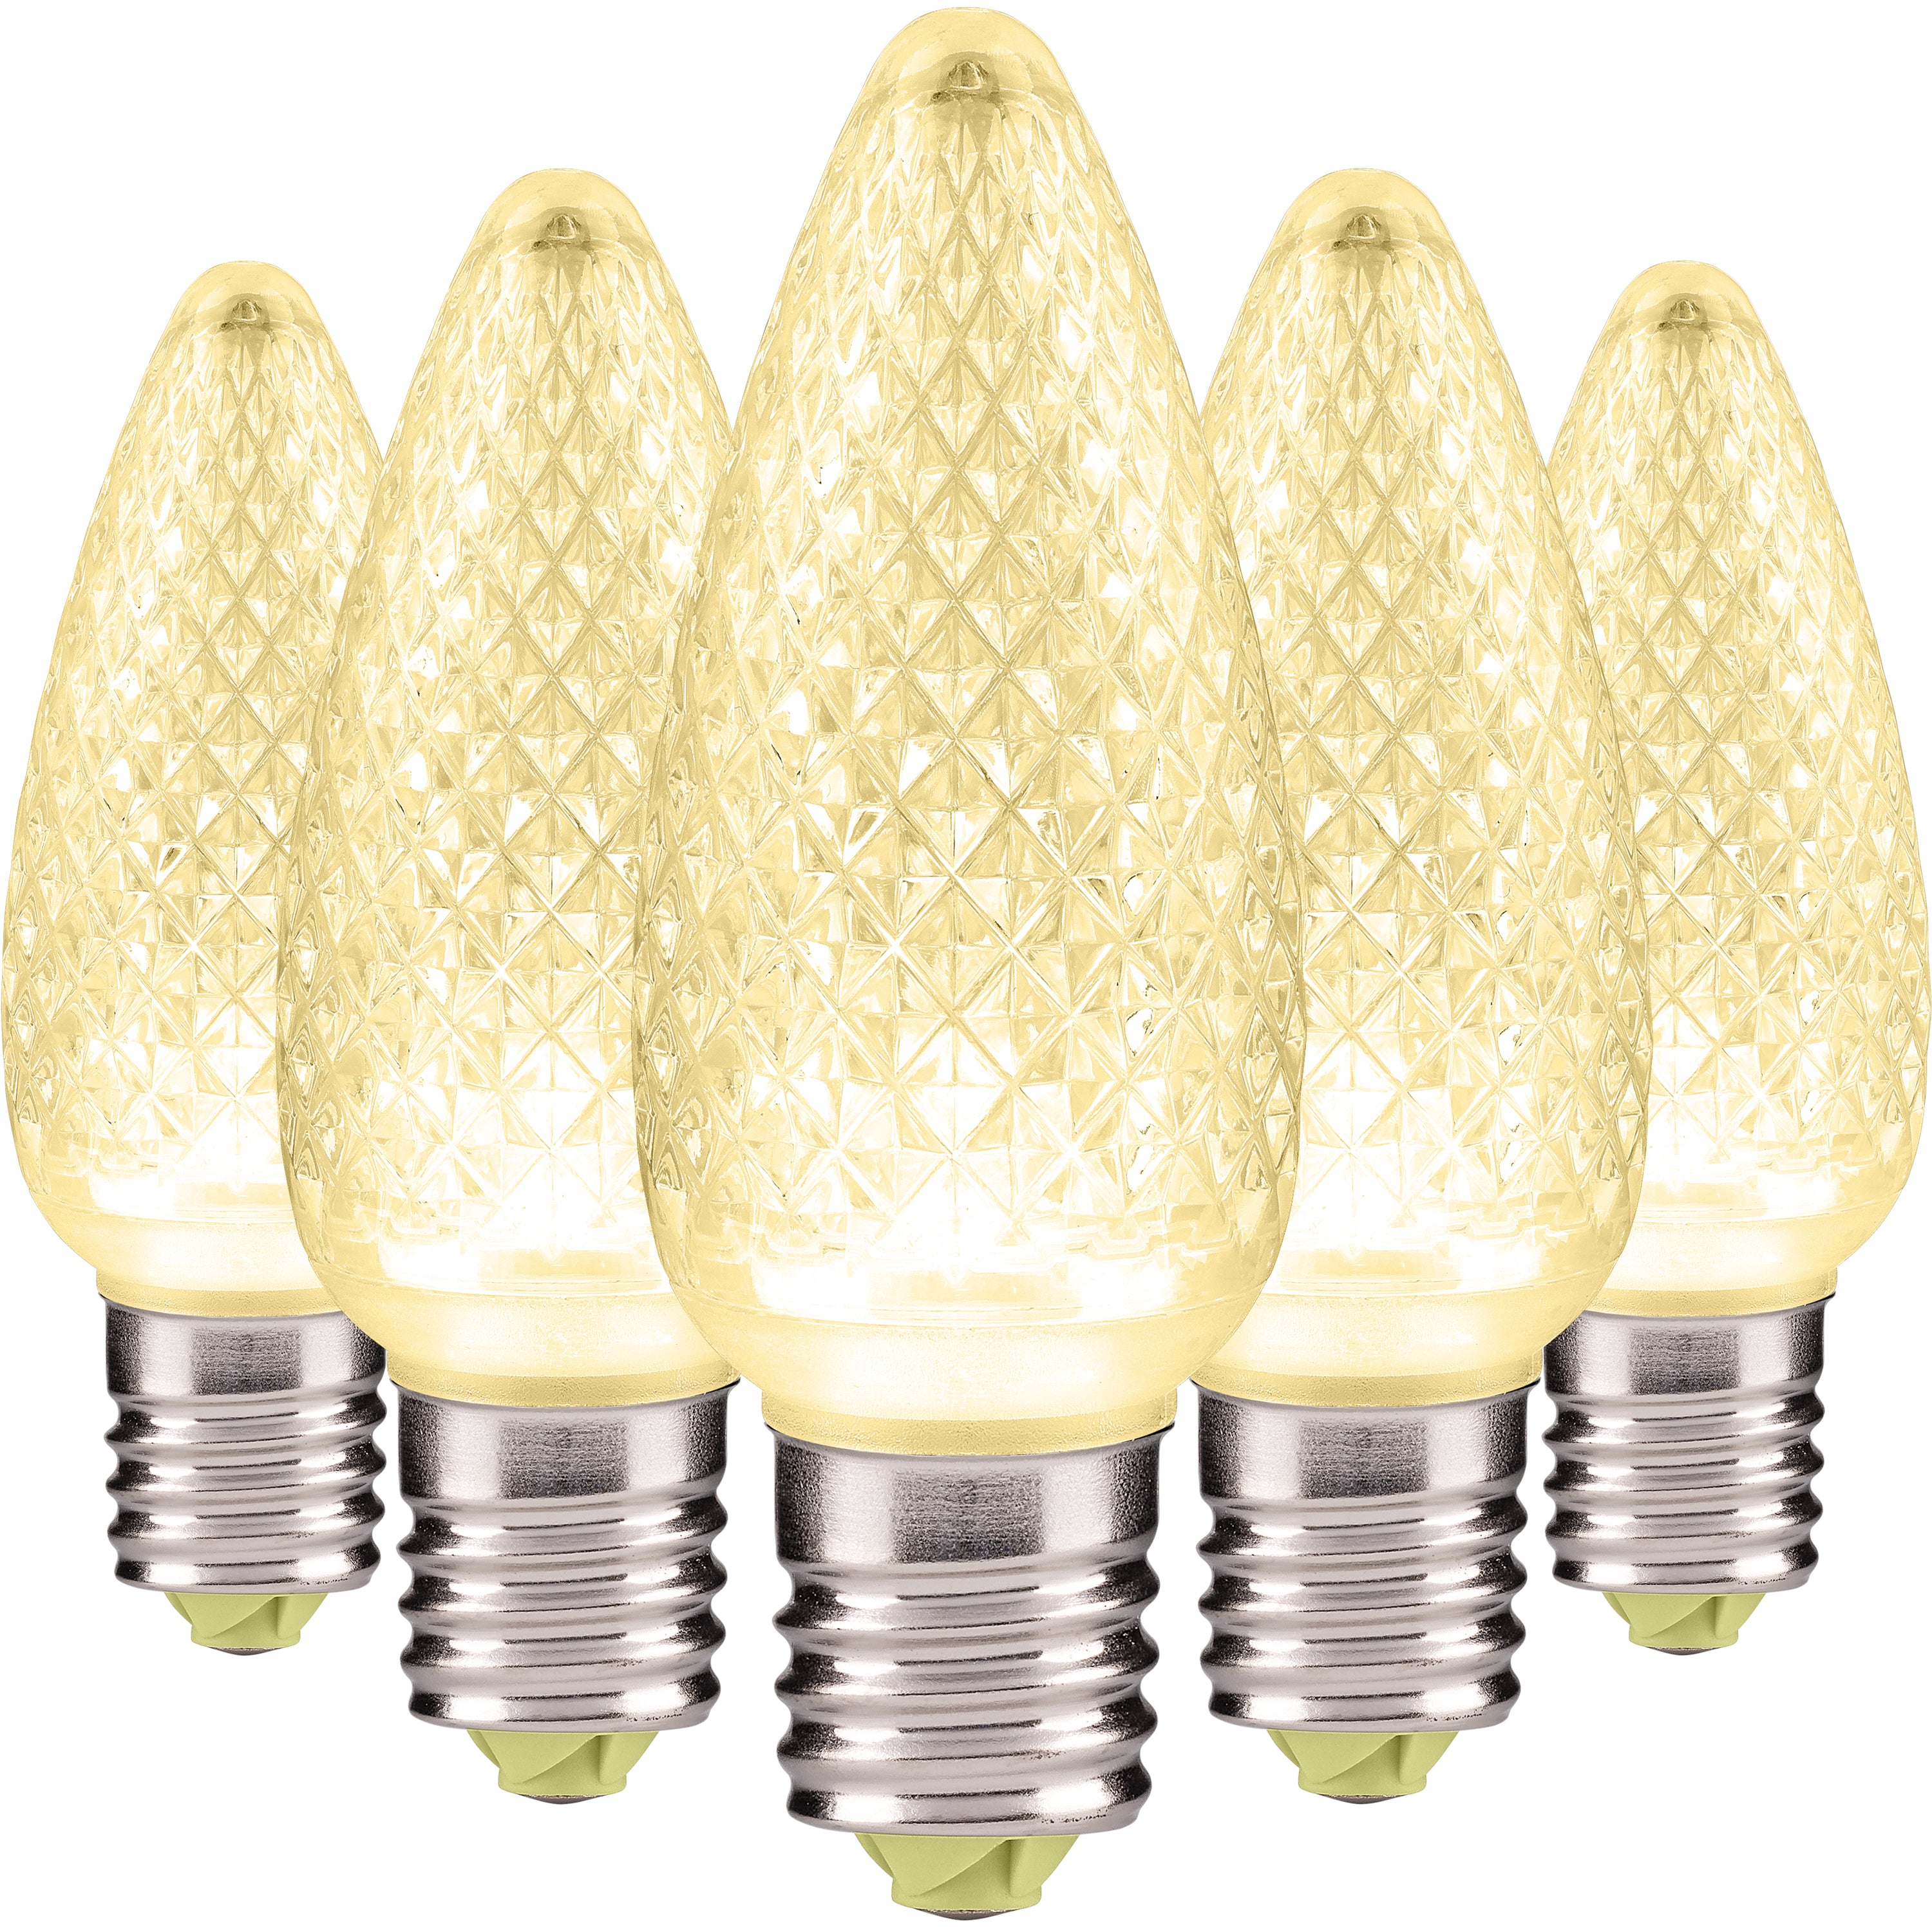 rangle Descent Saks HLO Lighting C9 LED Christmas Light Bulbs | Sun Warm White & More